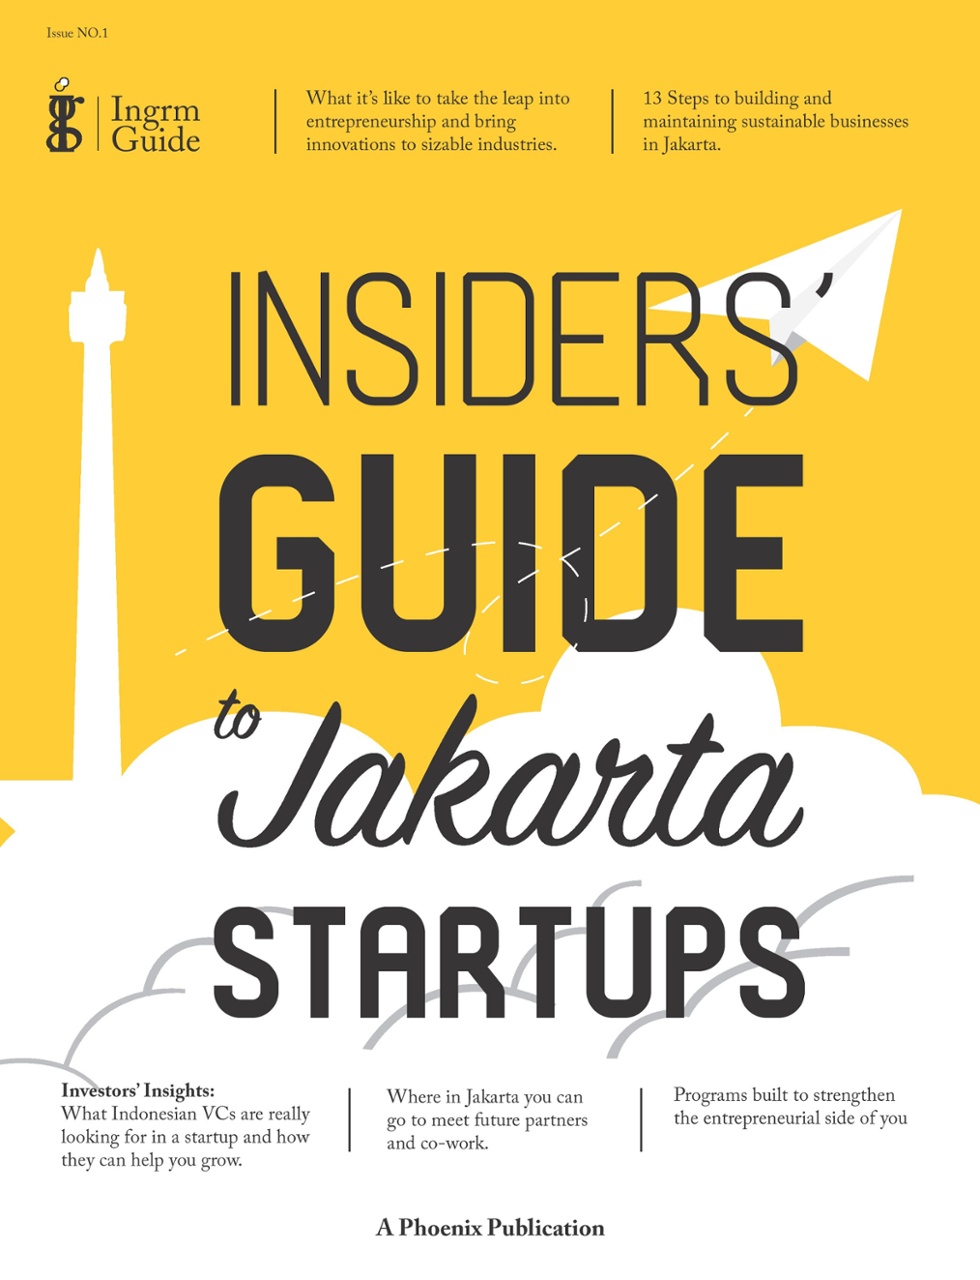 Insiders' guide to Jakarta startups